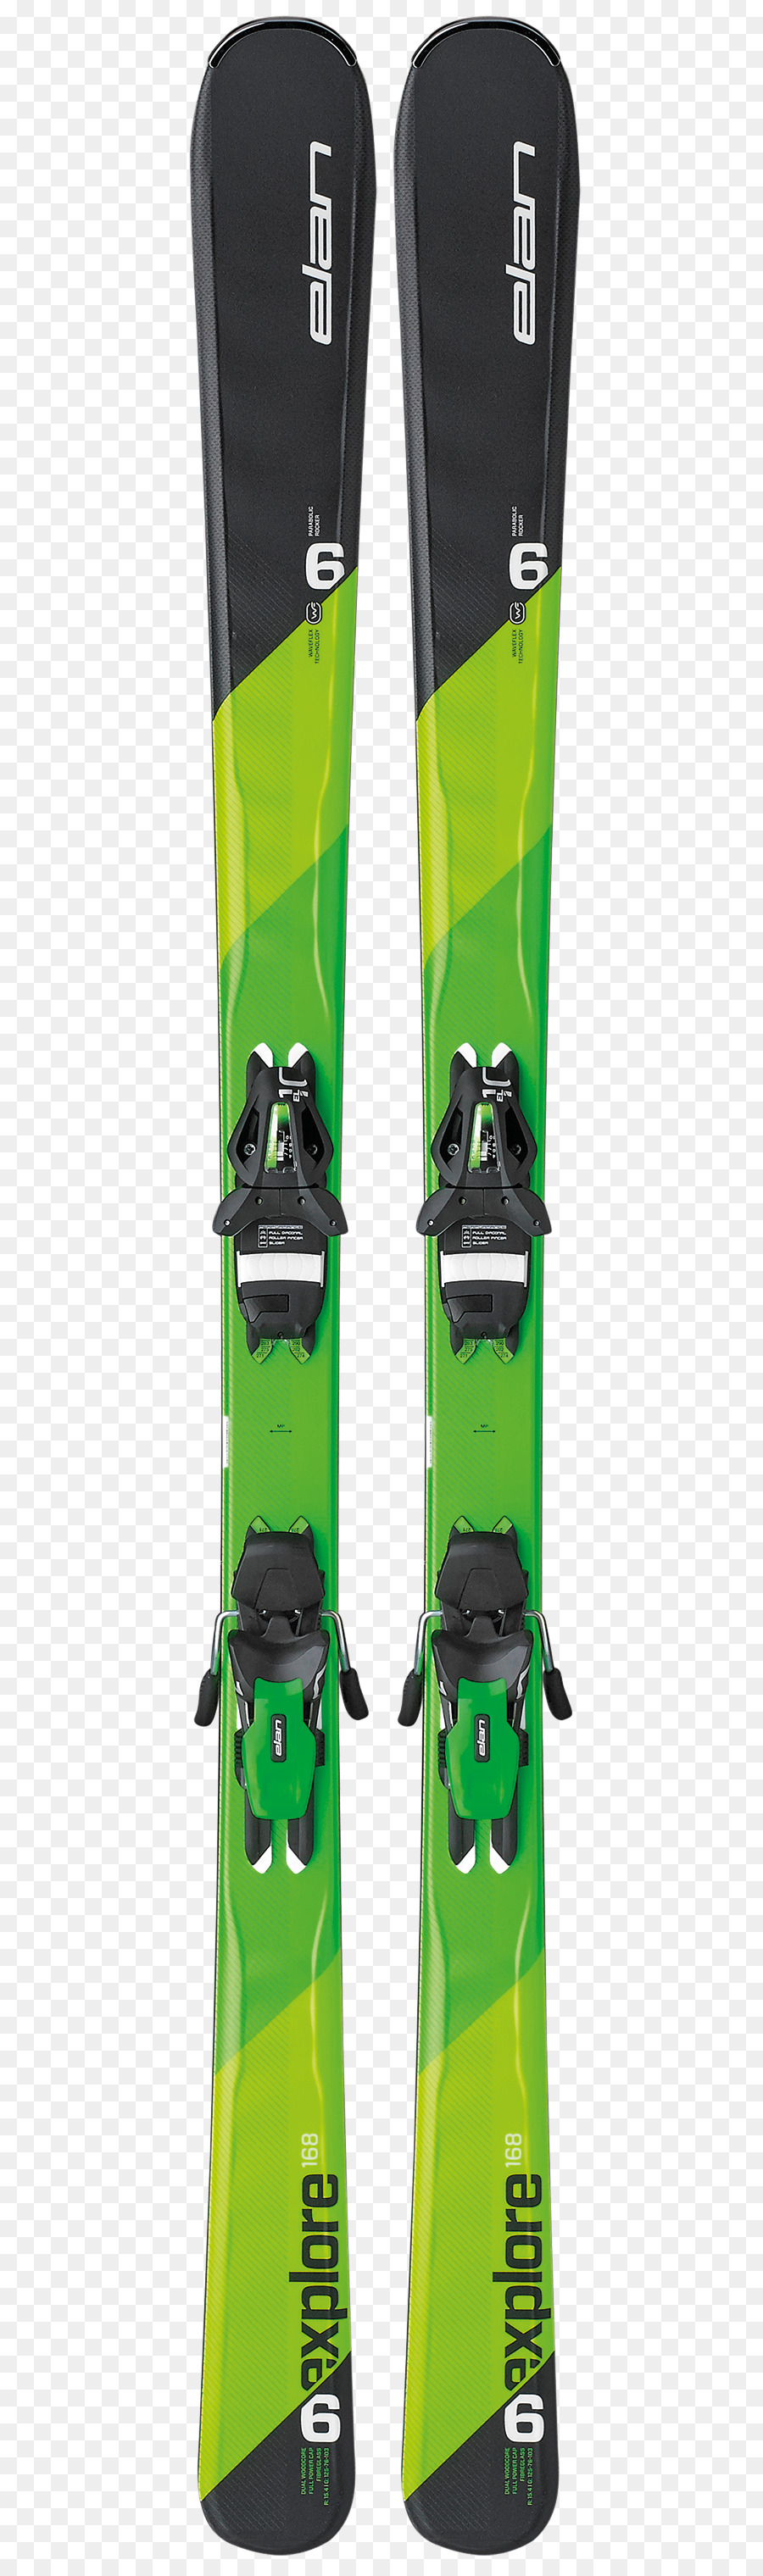 Attacchi da sci Elan sci Alpino - sci